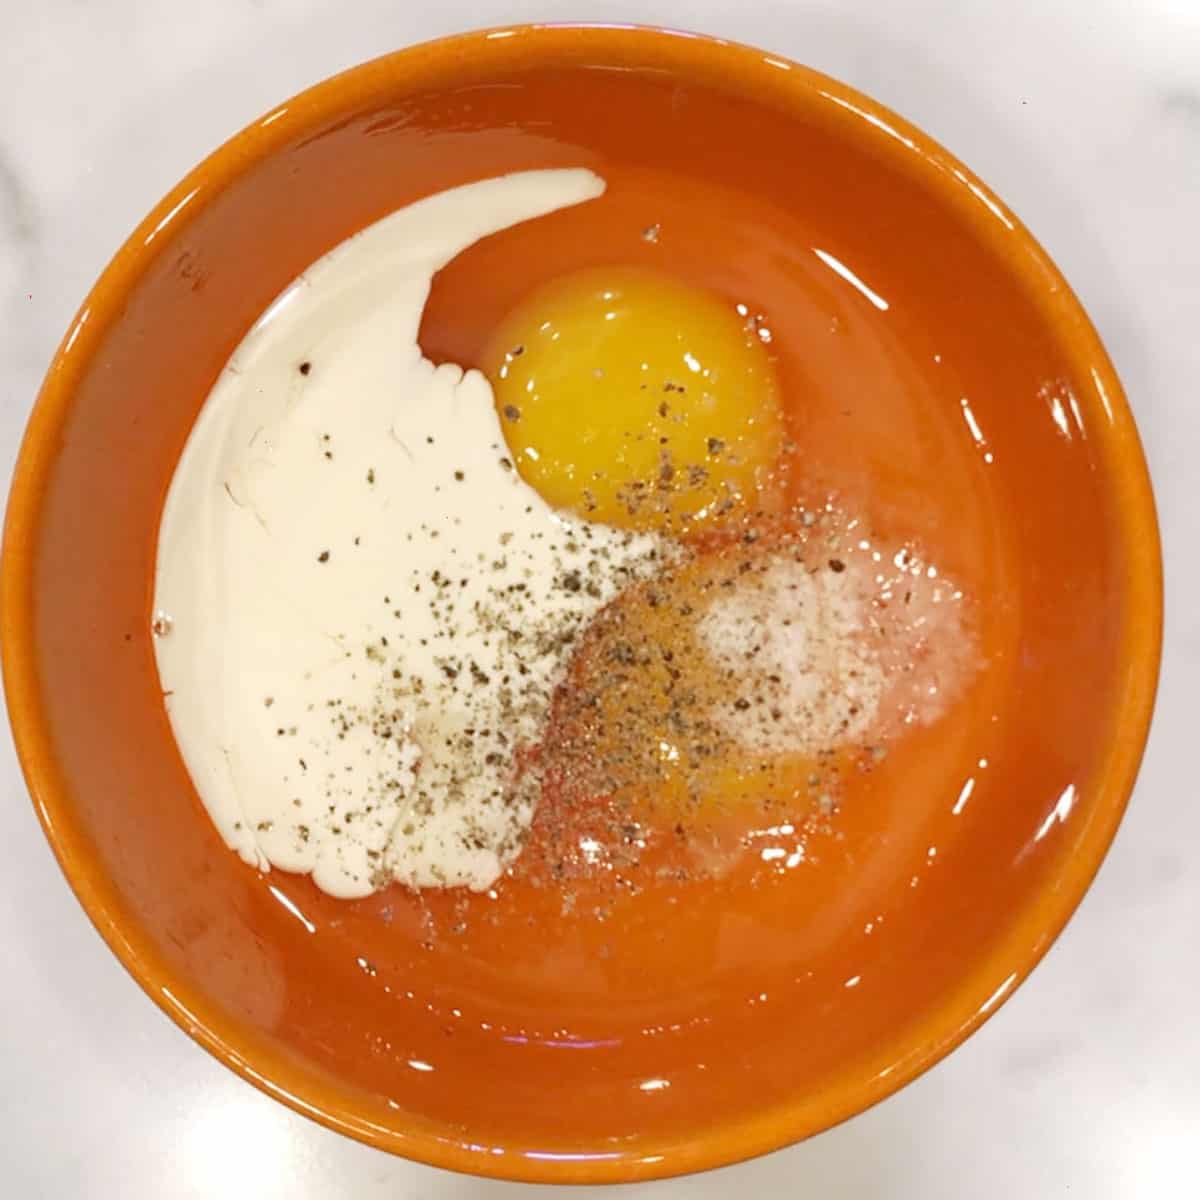 Eggs in Microwave Recipe 2 min Microwave Eggs